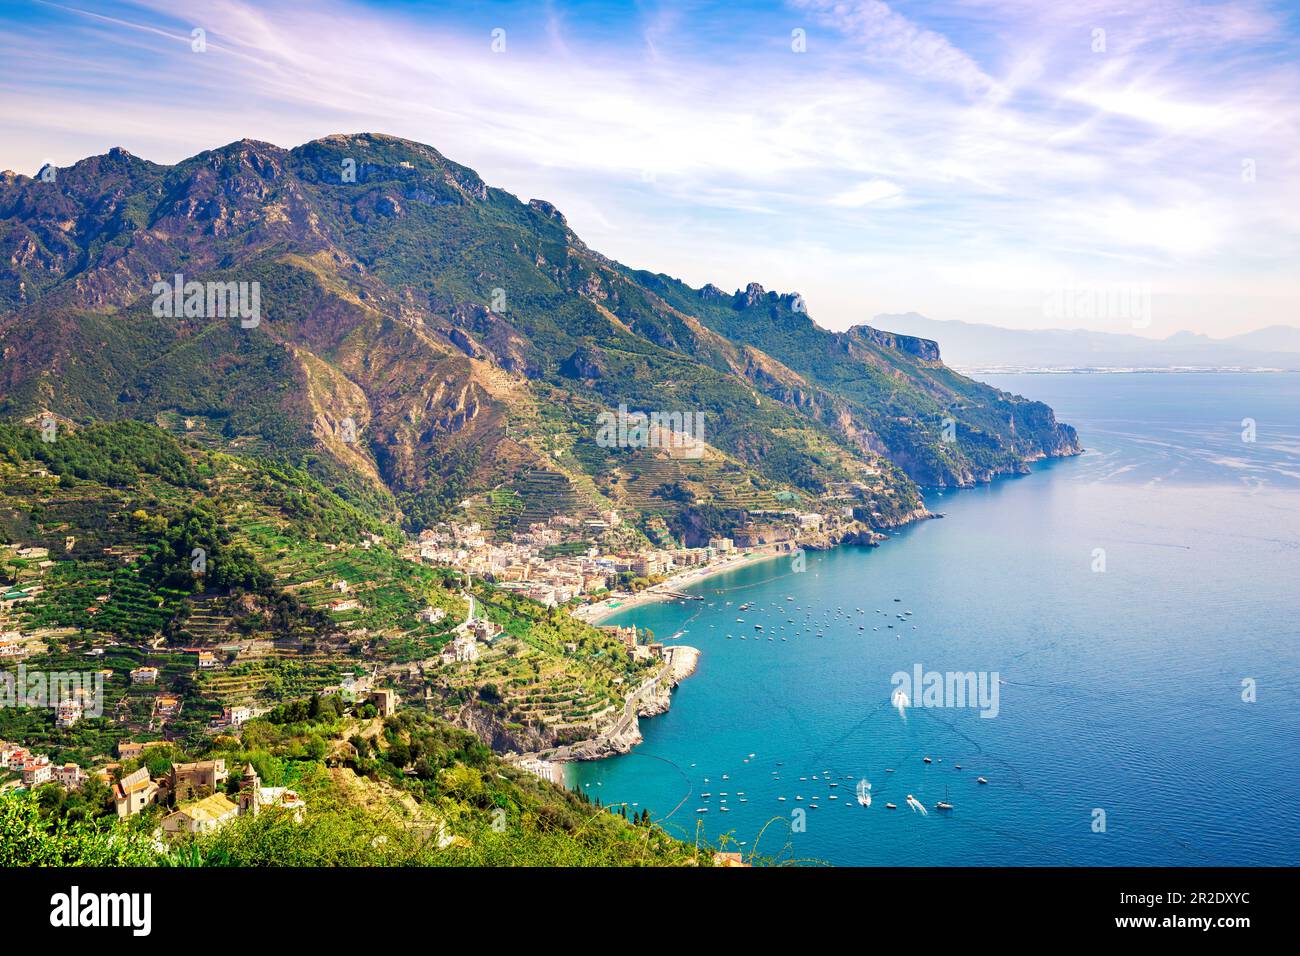 The Amalfi coast, Italy Stock Photo